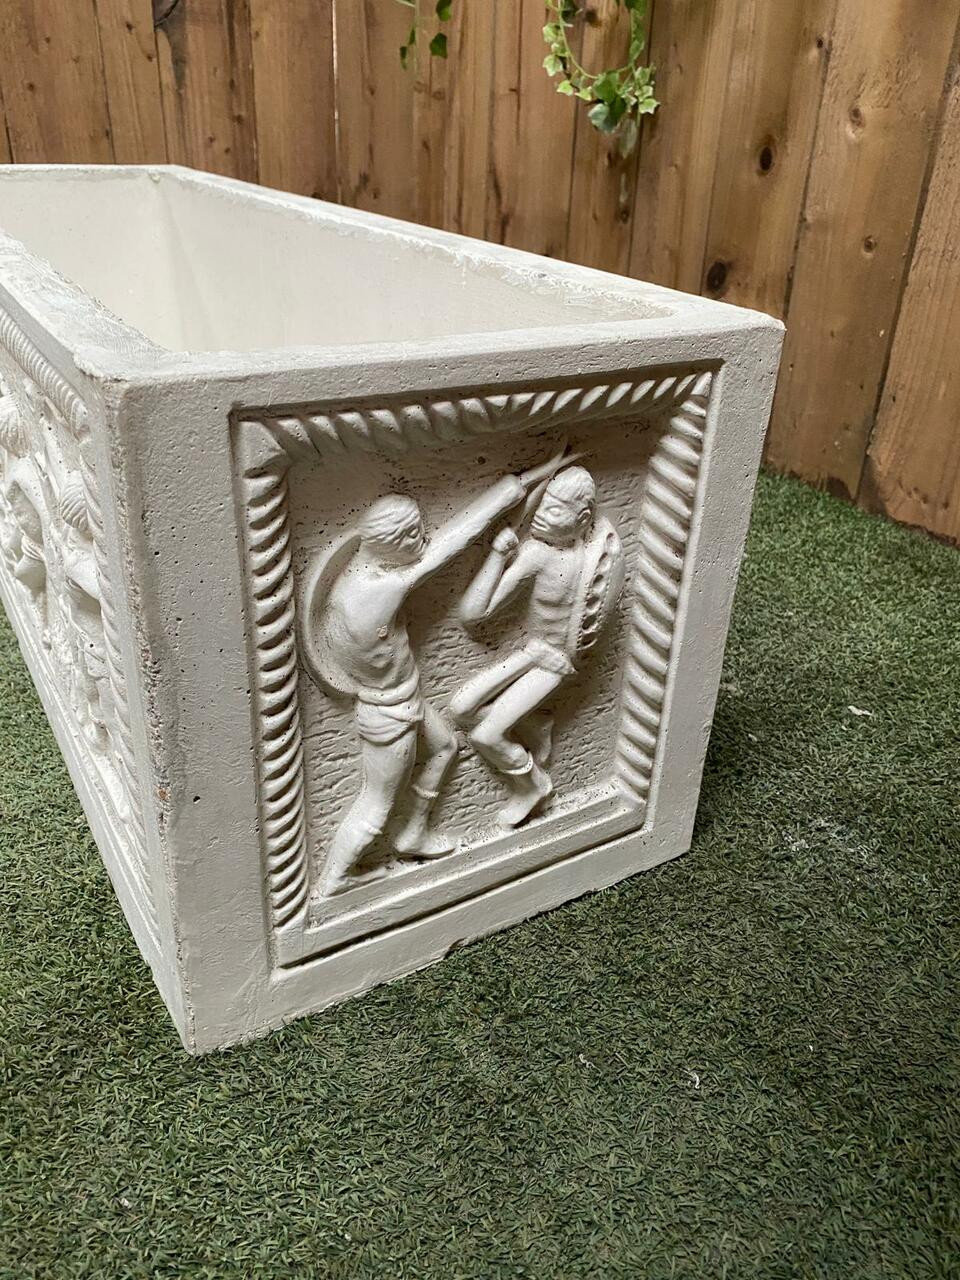 Gladiator Design White Stone Planter Trough